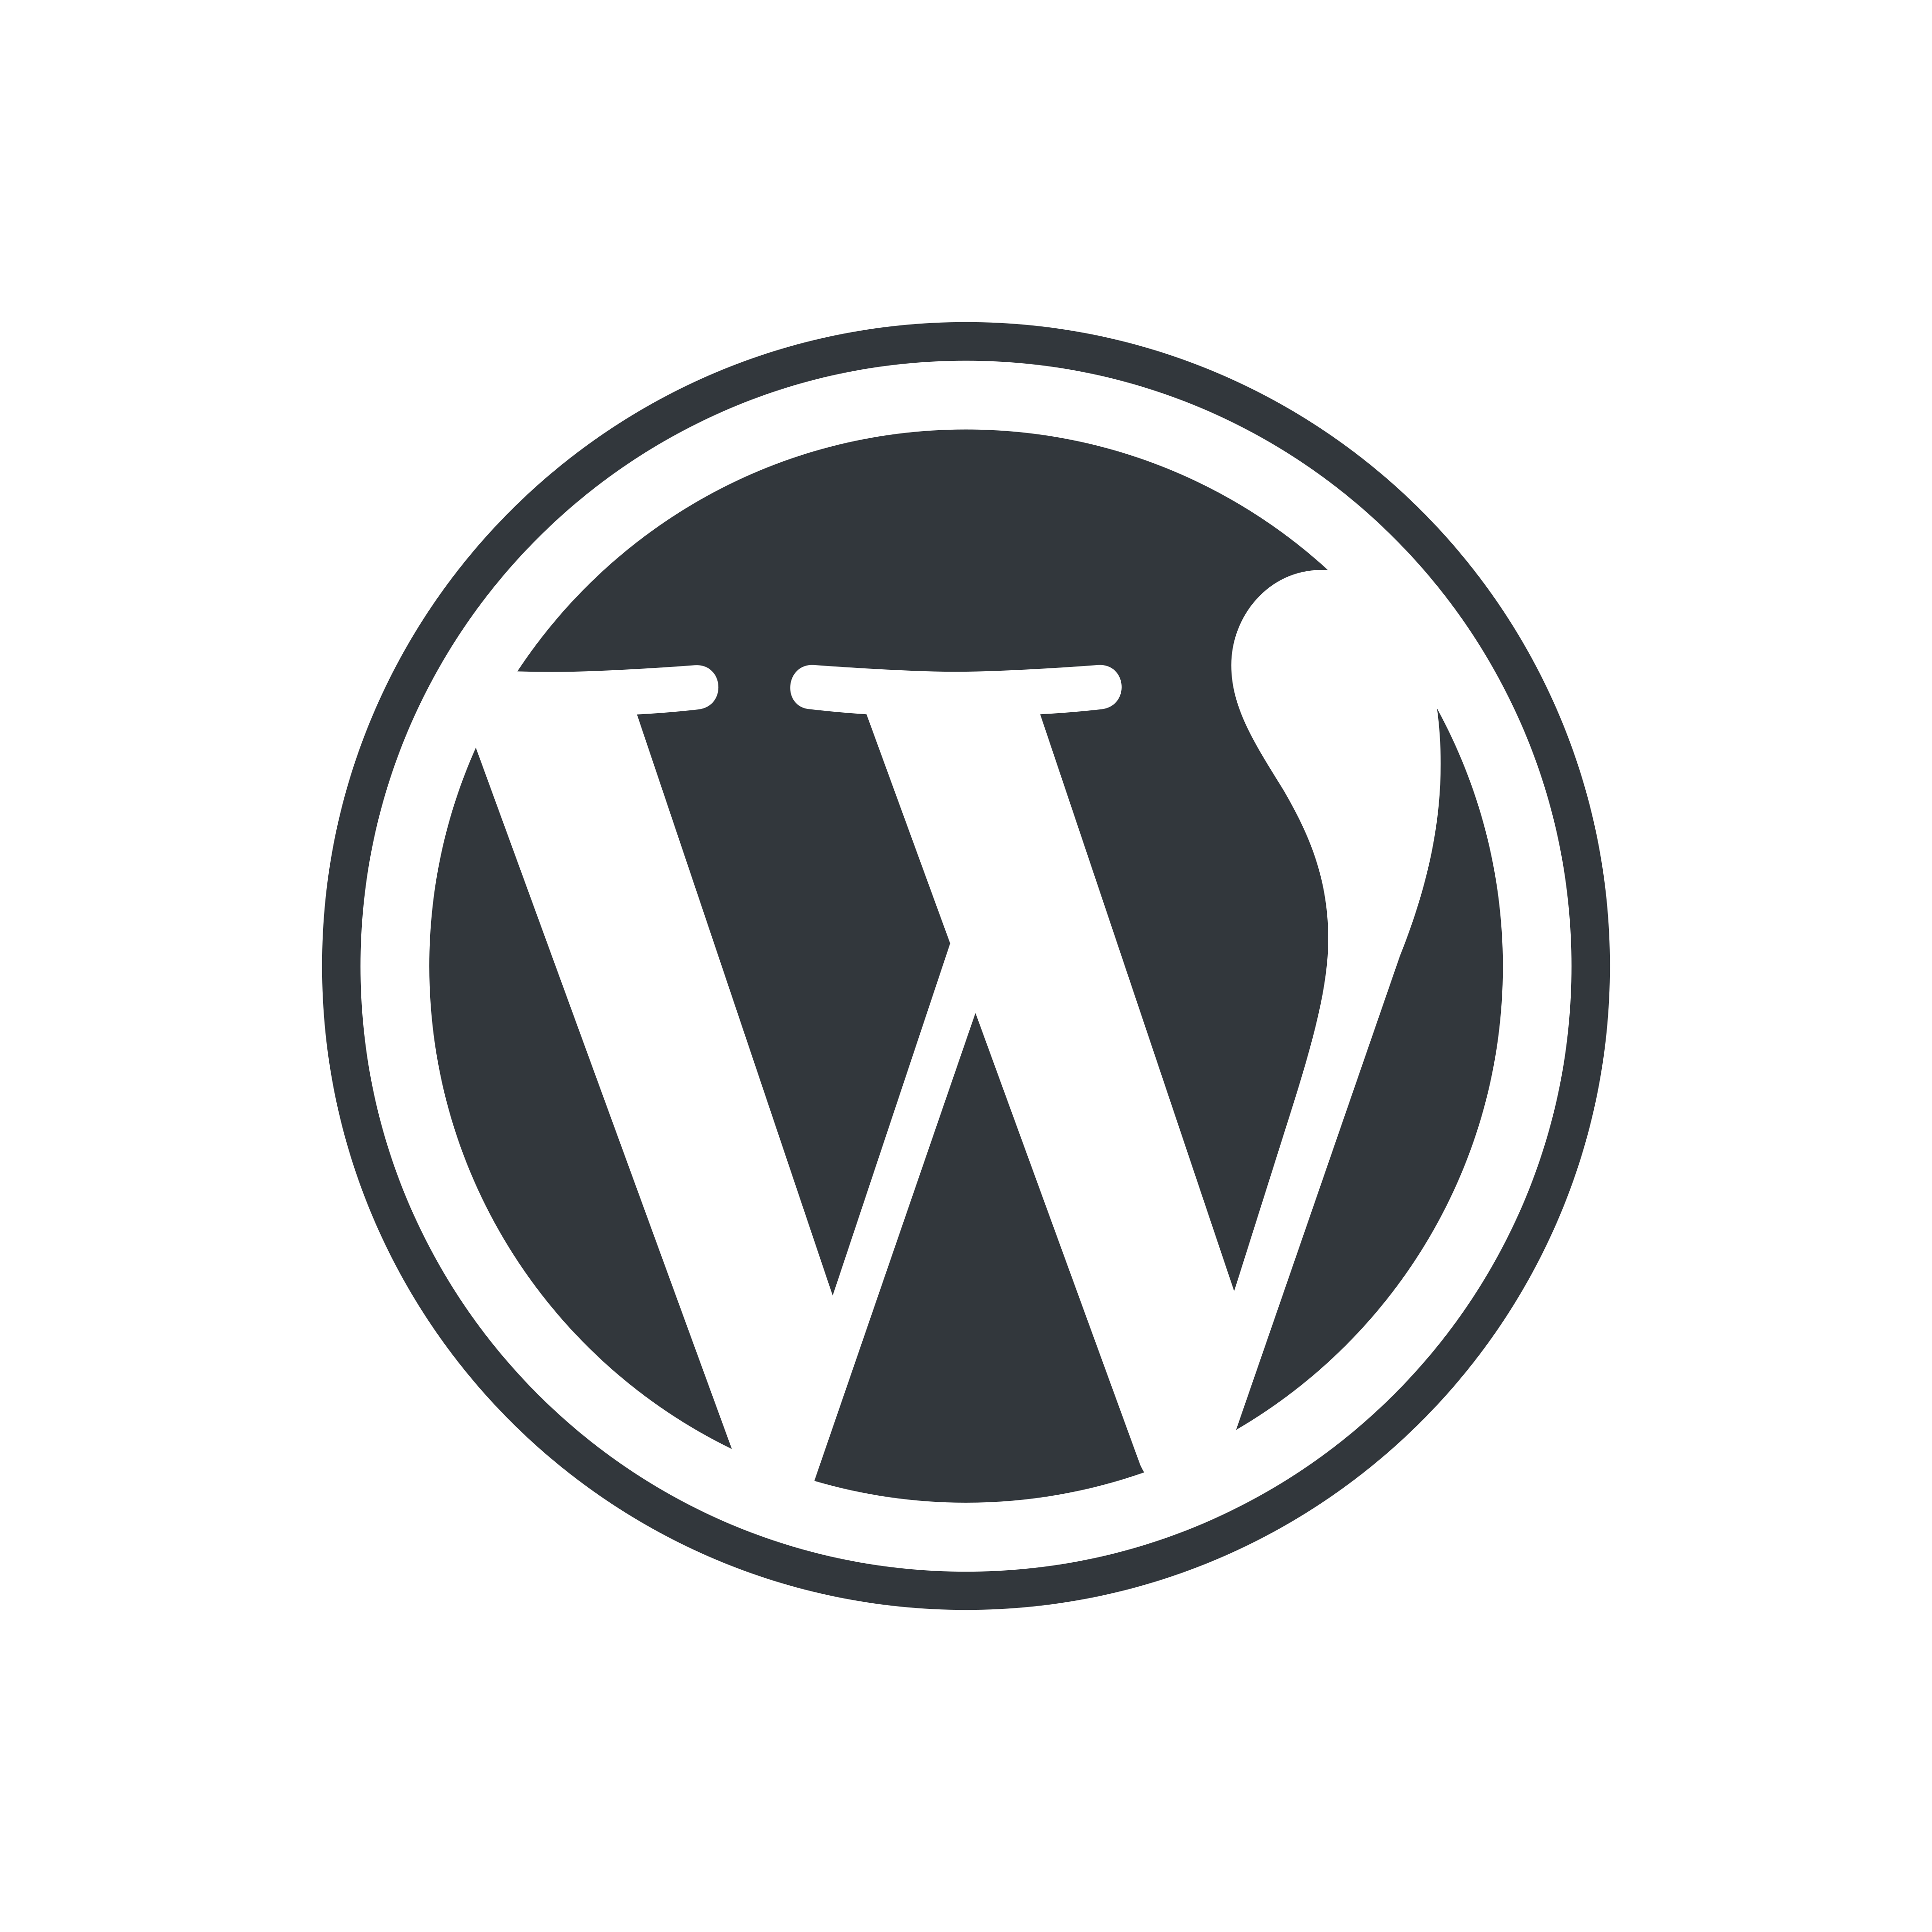 wordpress logo 1 1 - Wordpress Logo